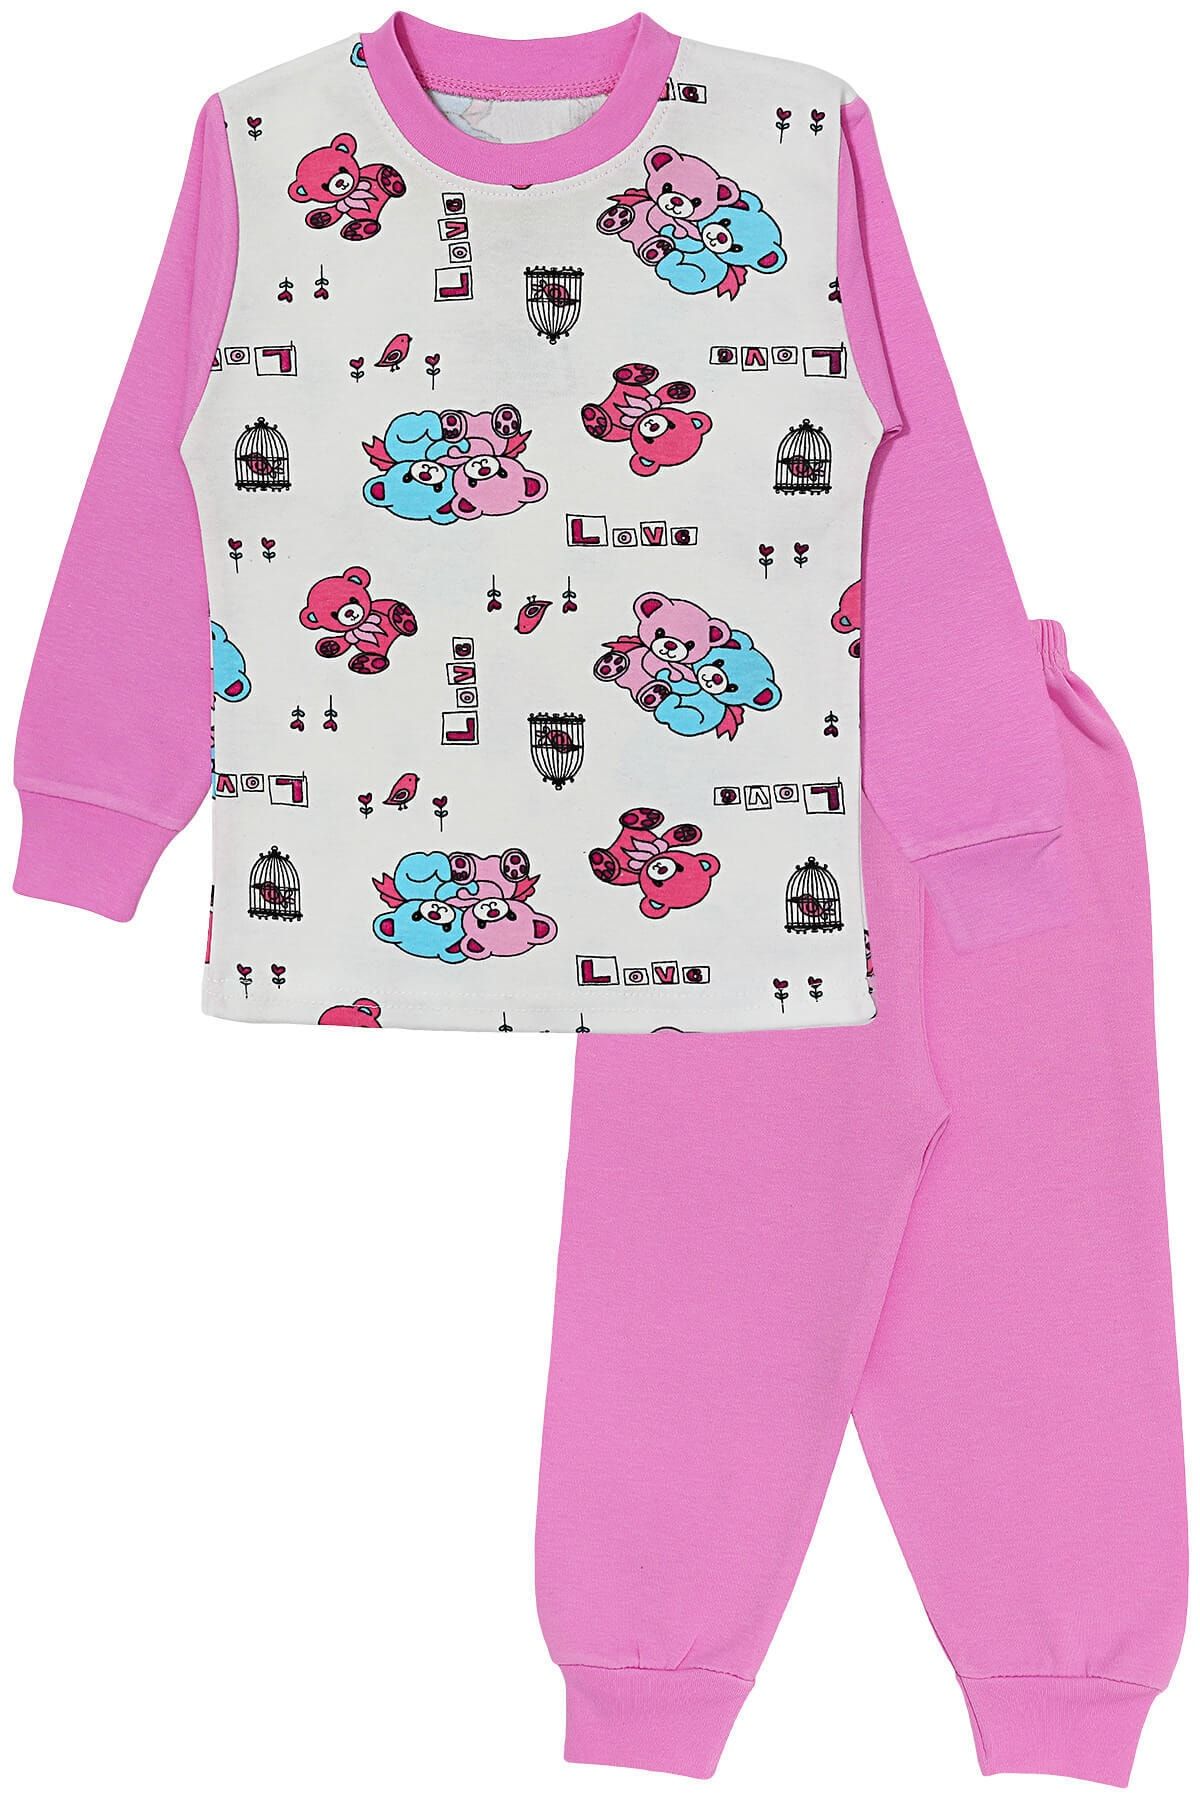 DobaKids Kız Çocuk Pembe Pijama Takımı